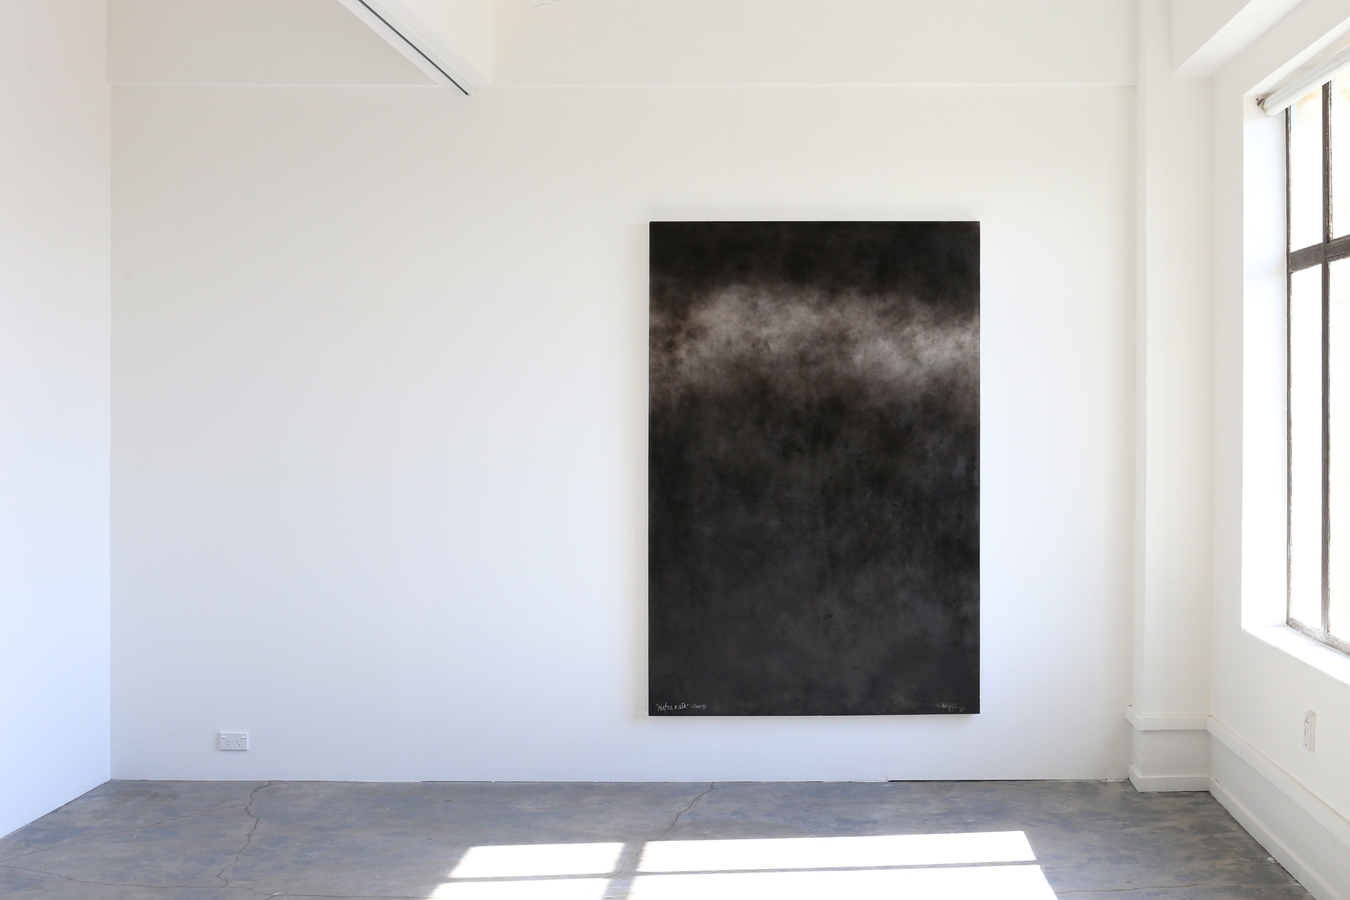 Mafoa e ata (Dawn), Kulimoe’anga ‘Stone’ Maka, 2017, smoke on canvas. Image: Daegan Wells.